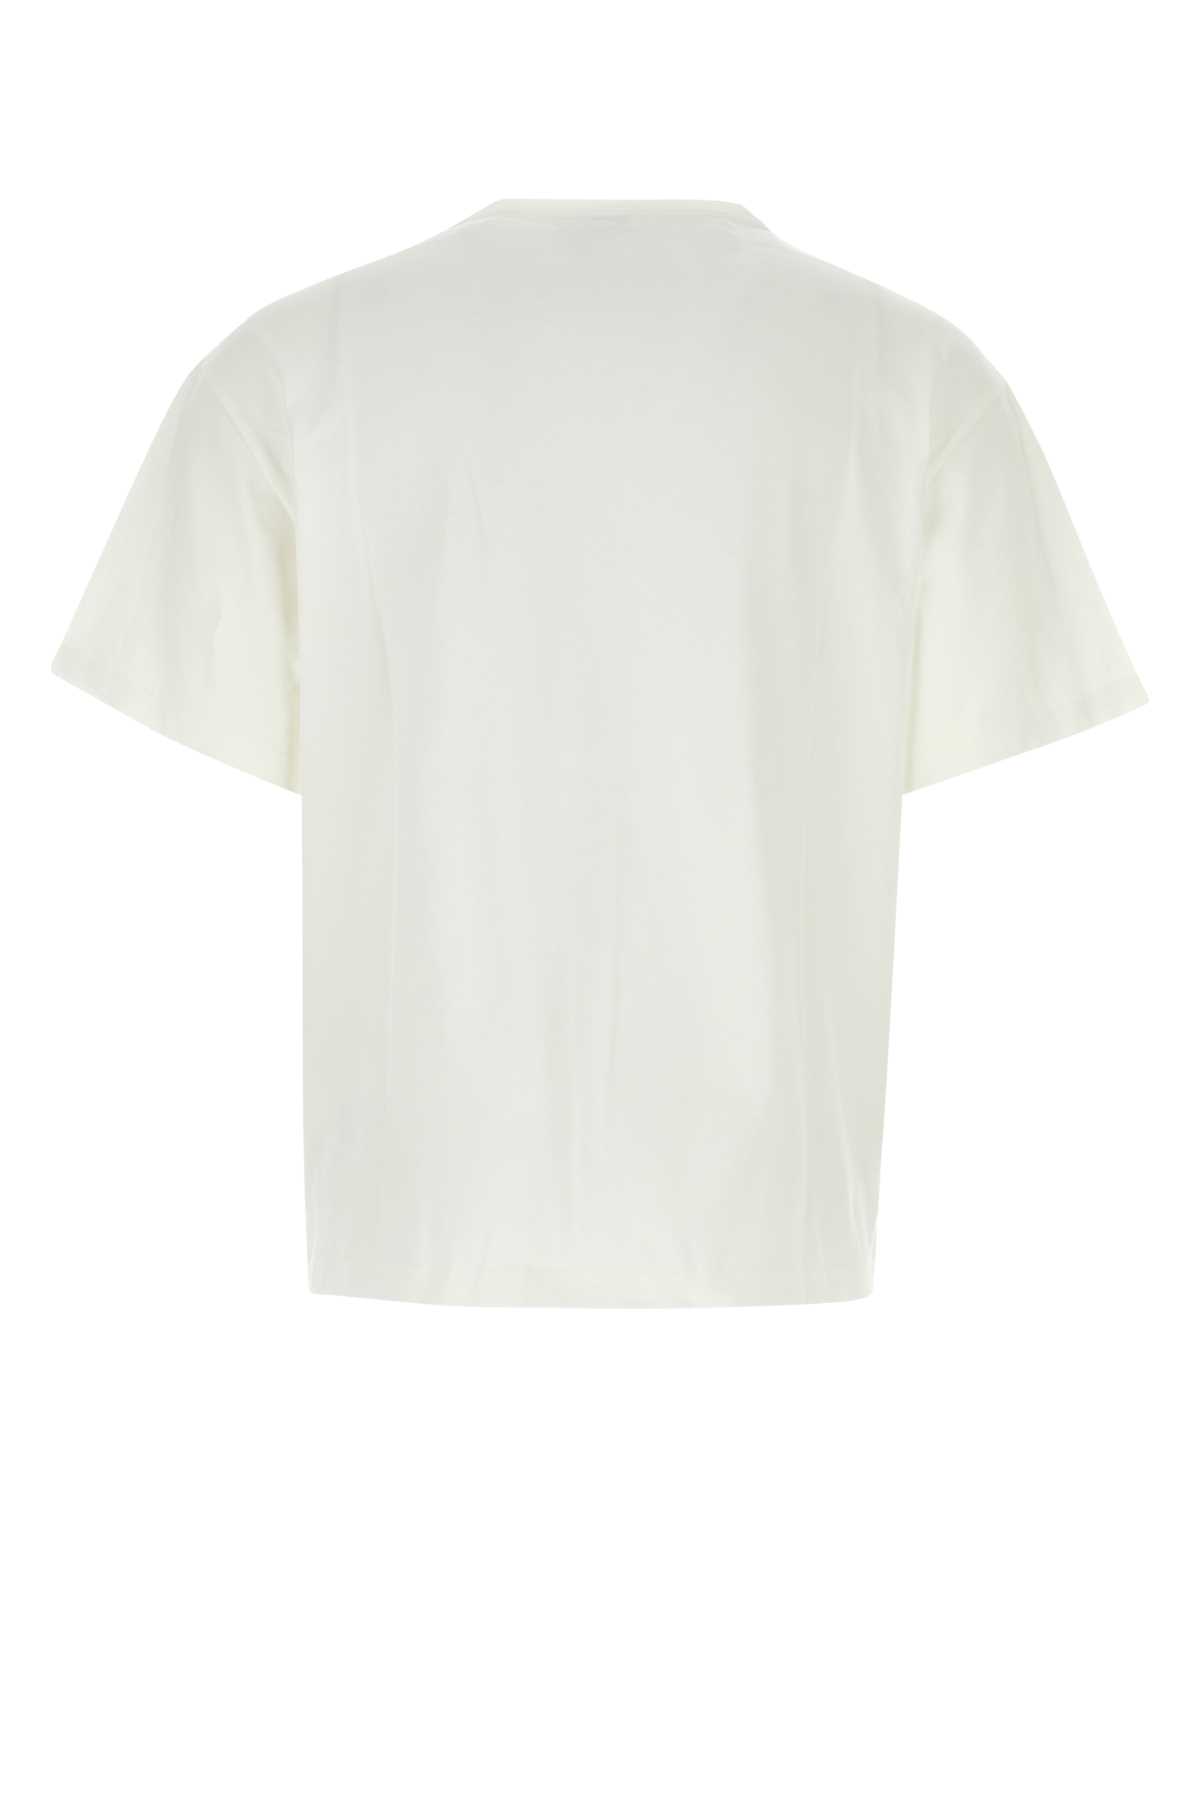 Etro White Cotton T-shirt In Bianco